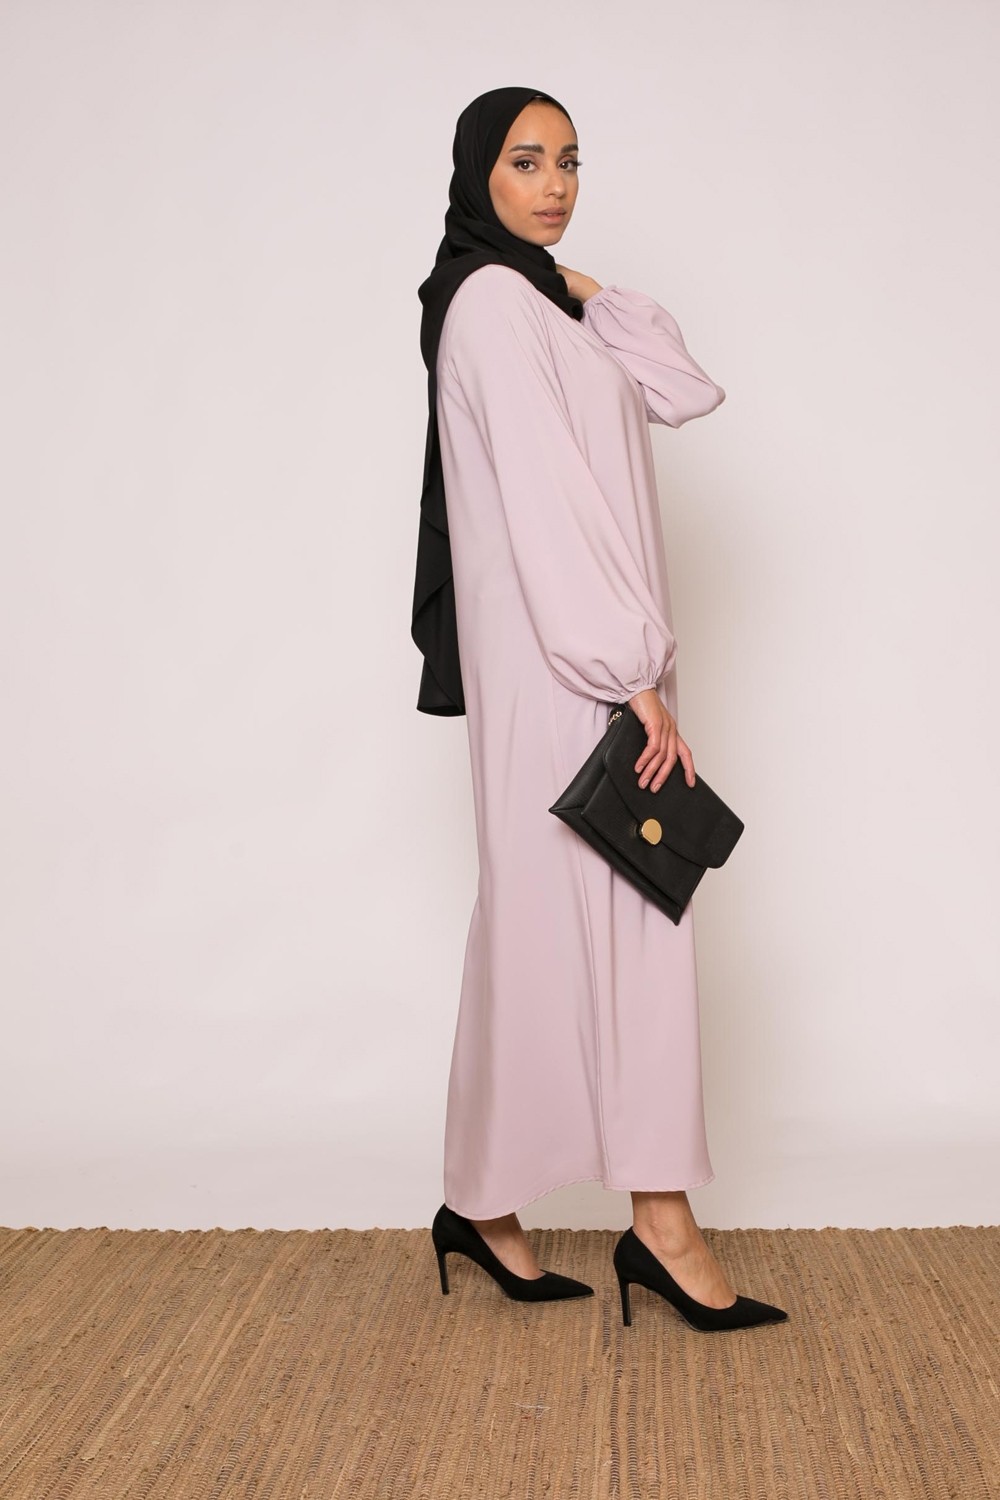 Robe kristal manche bouffante lilas rosé boutique hijab musulmane